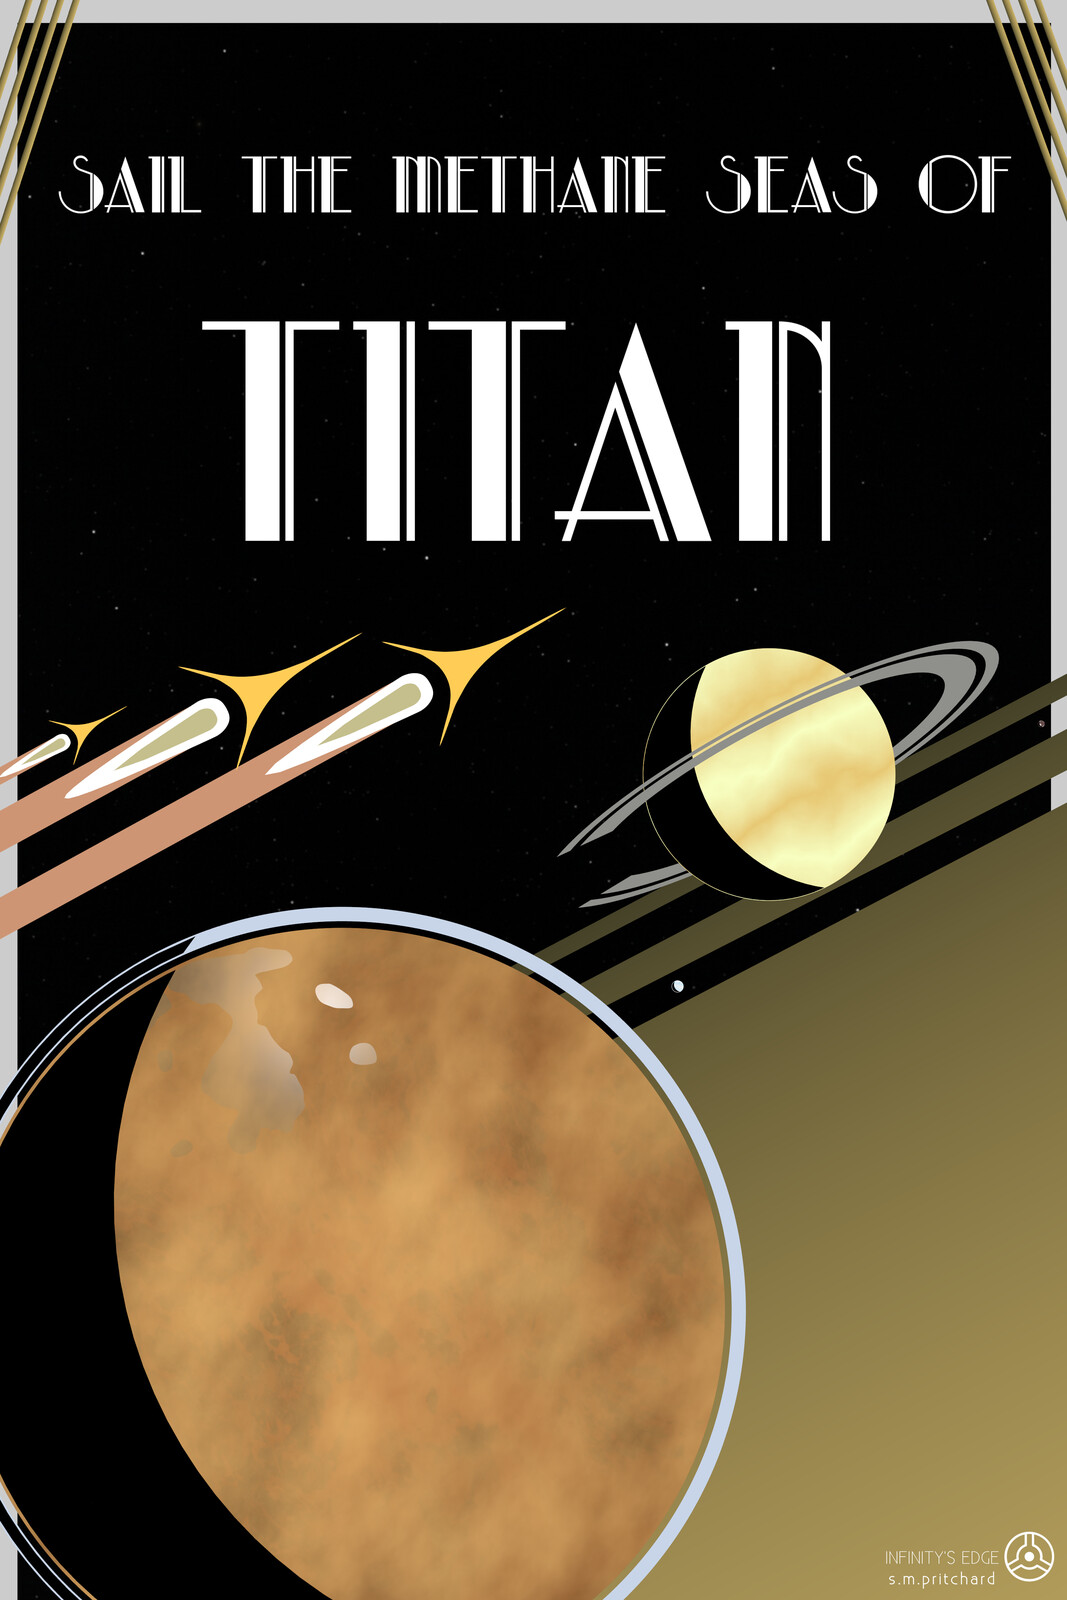 The frigid hydrocarbon lakes of Saturn's largest moon, Titan.